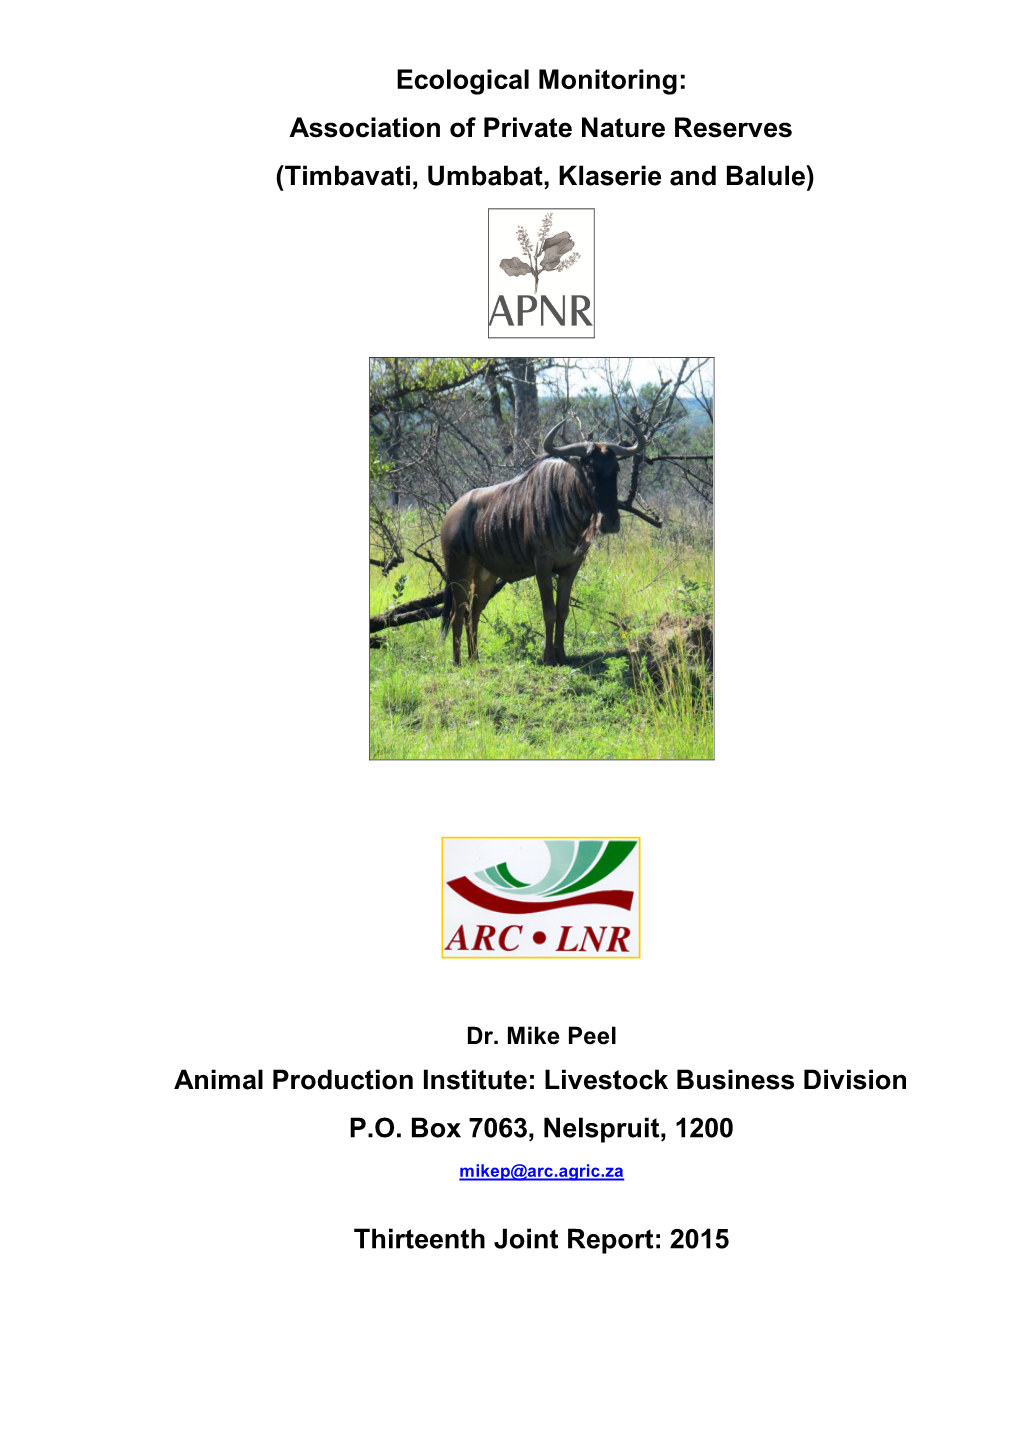 Ecological Monitoring: Association of Private Nature Reserves (Timbavati, Umbabat, Klaserie and Balule)